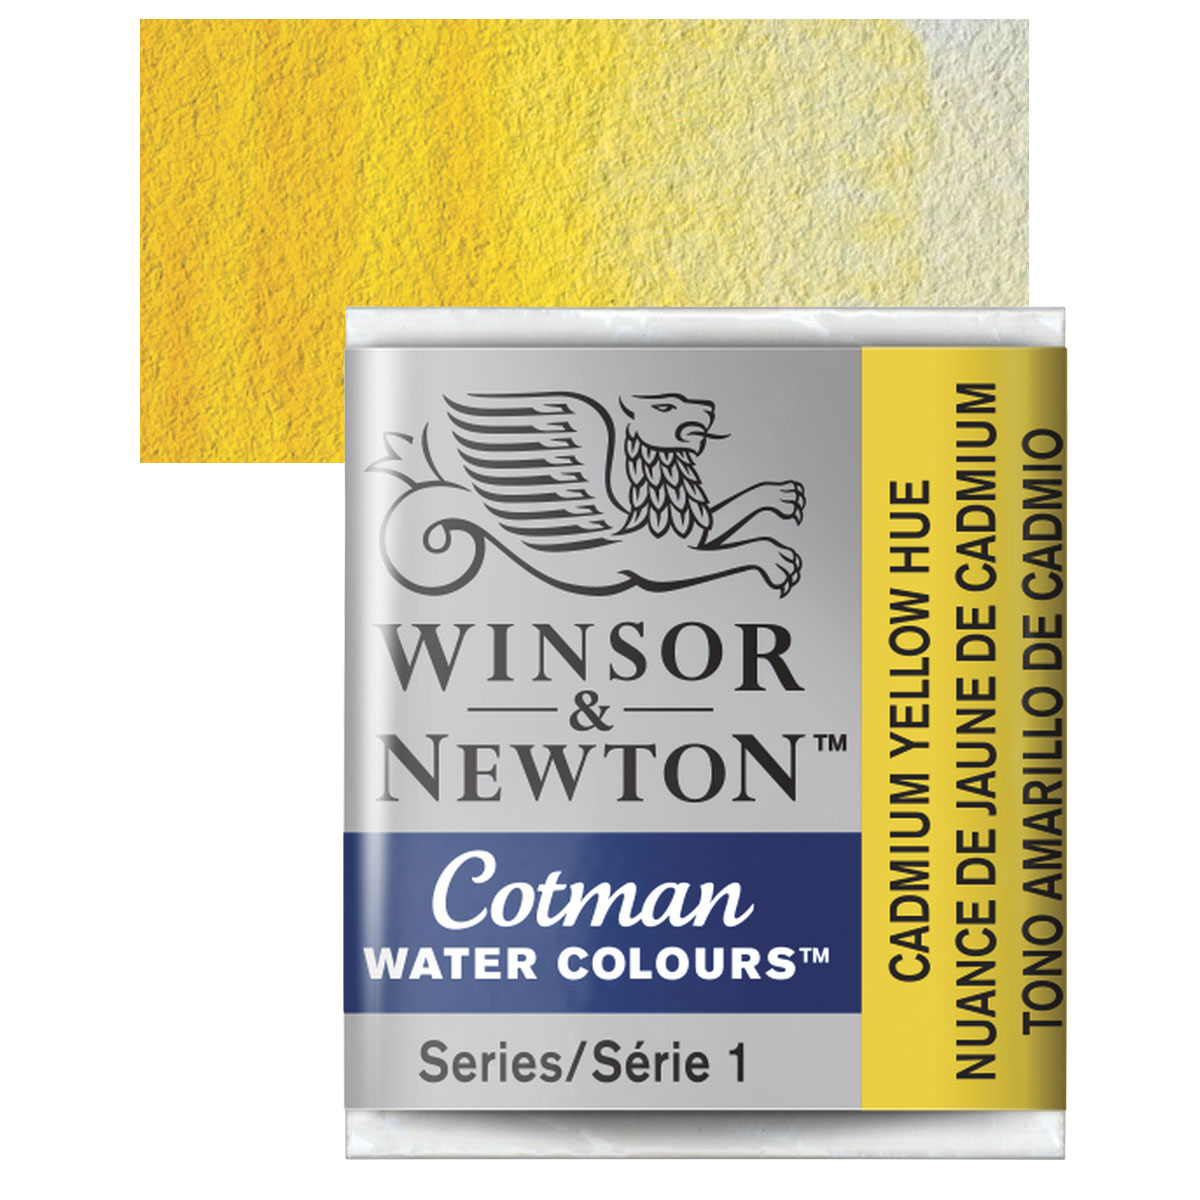 Winsor & Newton Cotman Watercolor Set - Field Travel Set, Set of